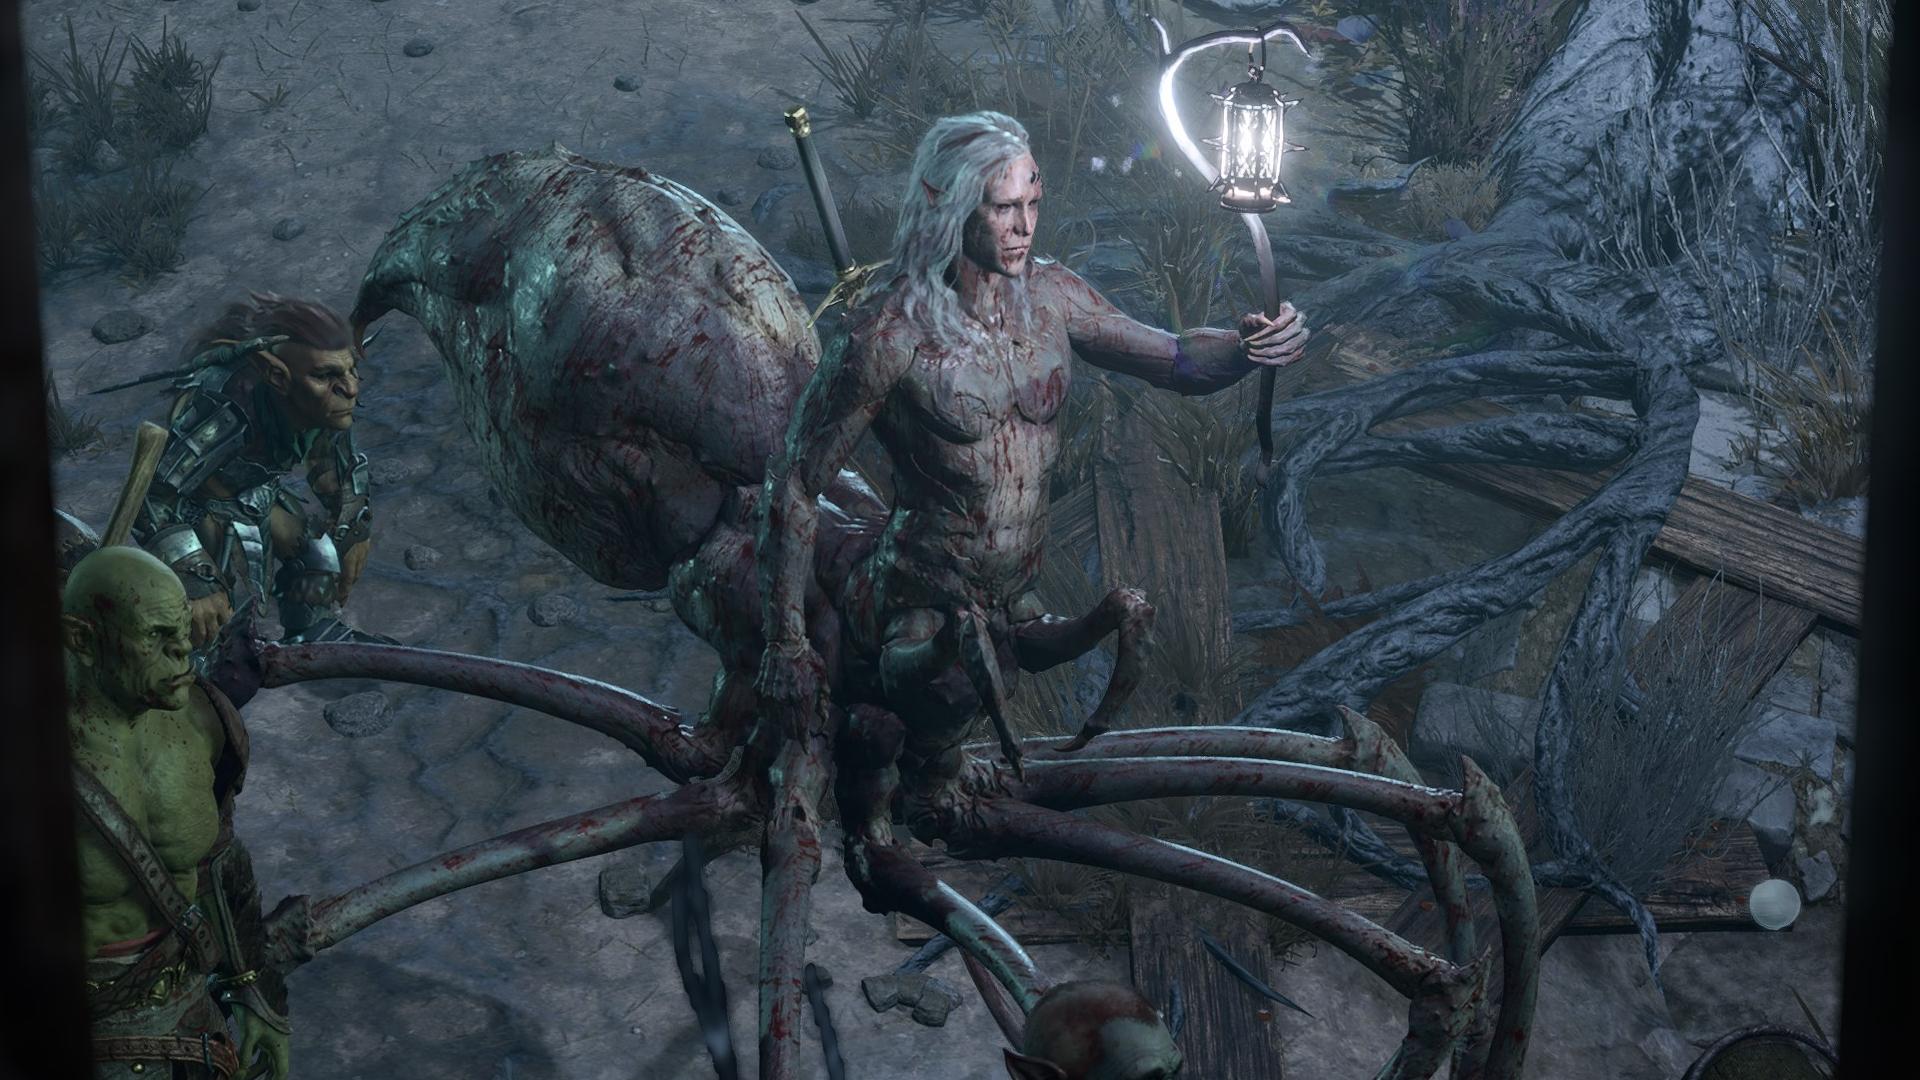 Kar’niss, a drider (half human half spider), walking down a path with a moonlantern in Baldur’s Gate 3.